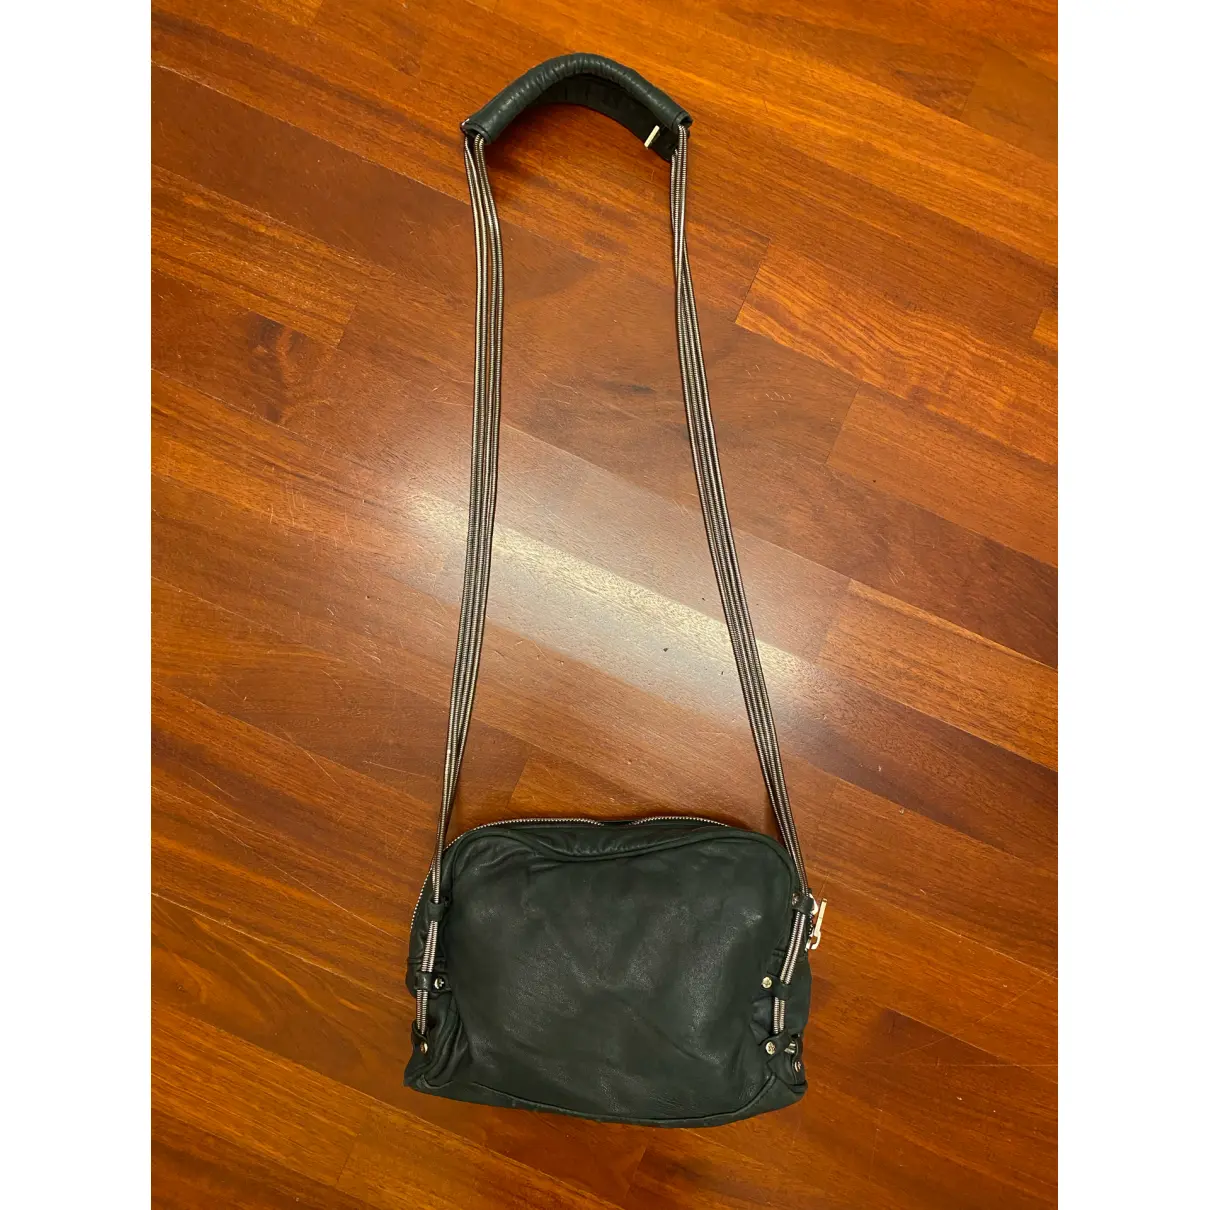 Buy Alexander Wang Brenda leather crossbody bag online